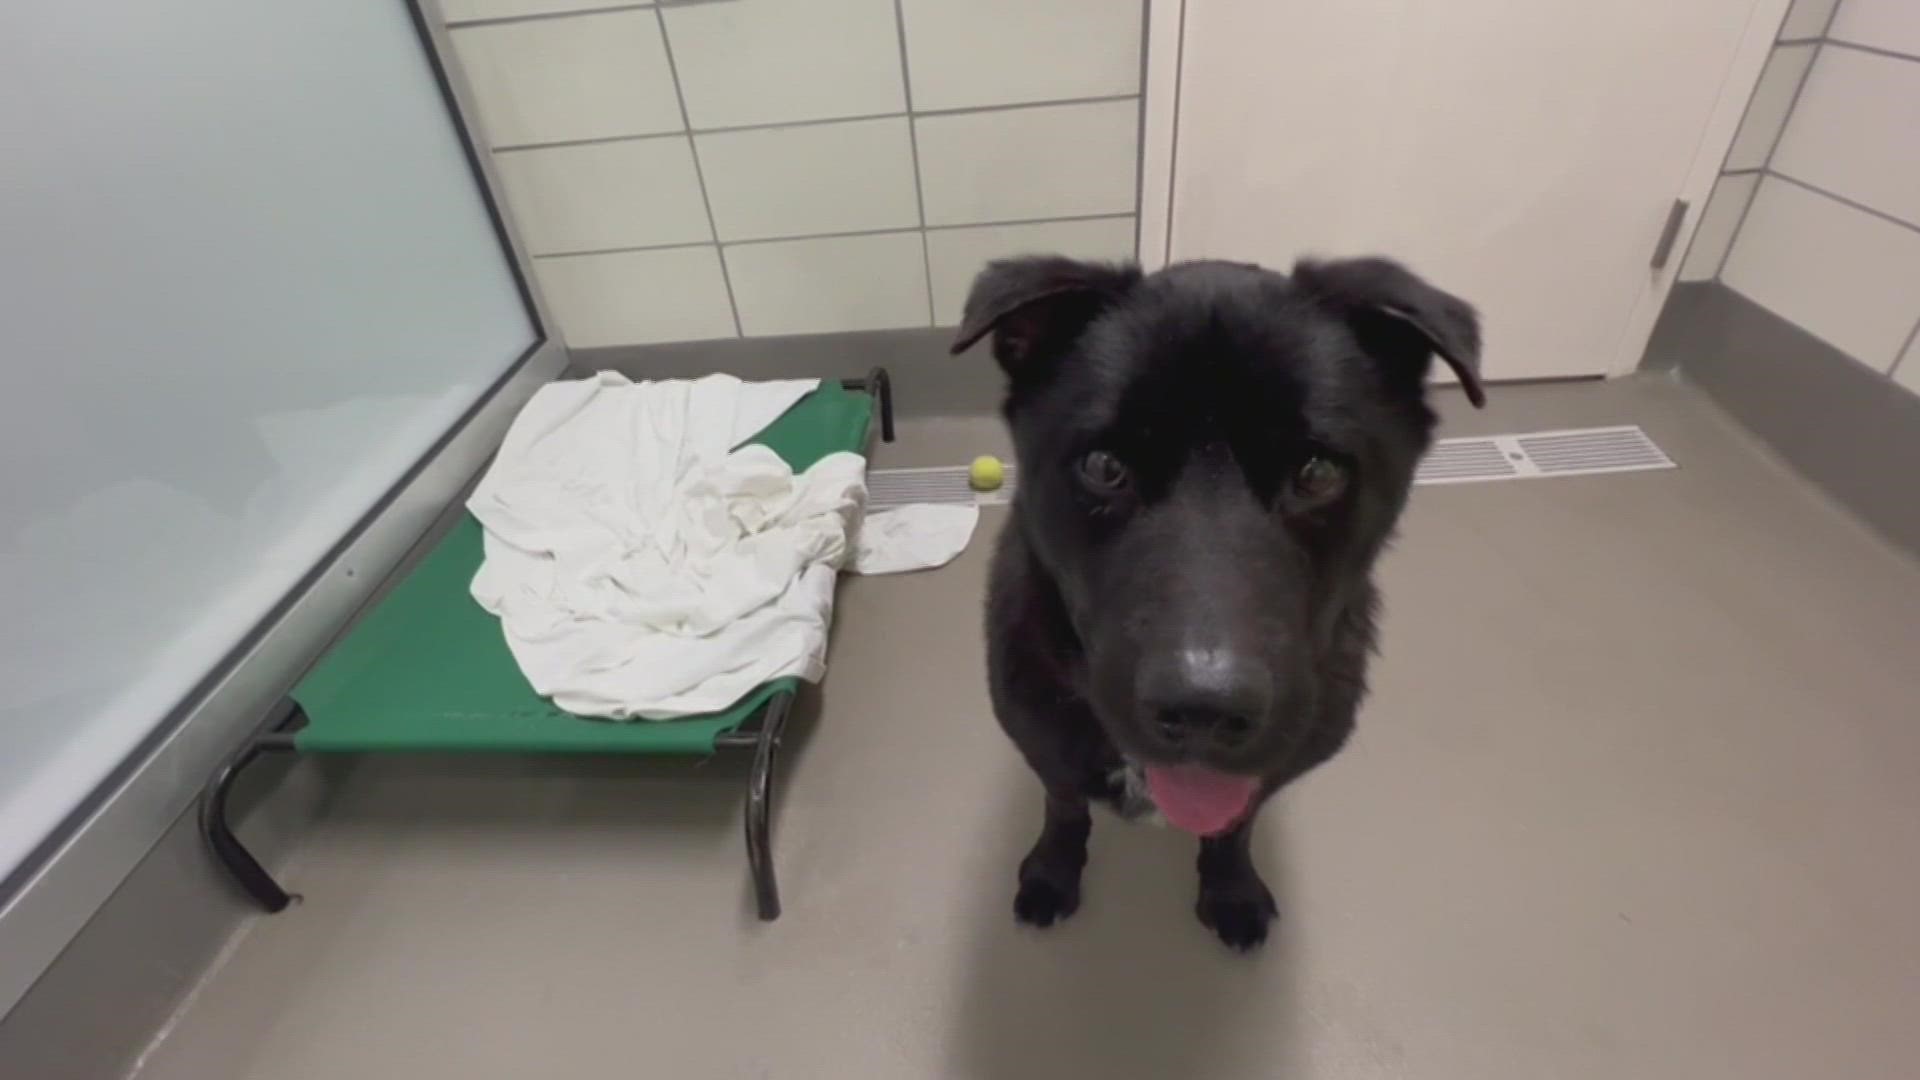 Meet this week's pup from SPCA!